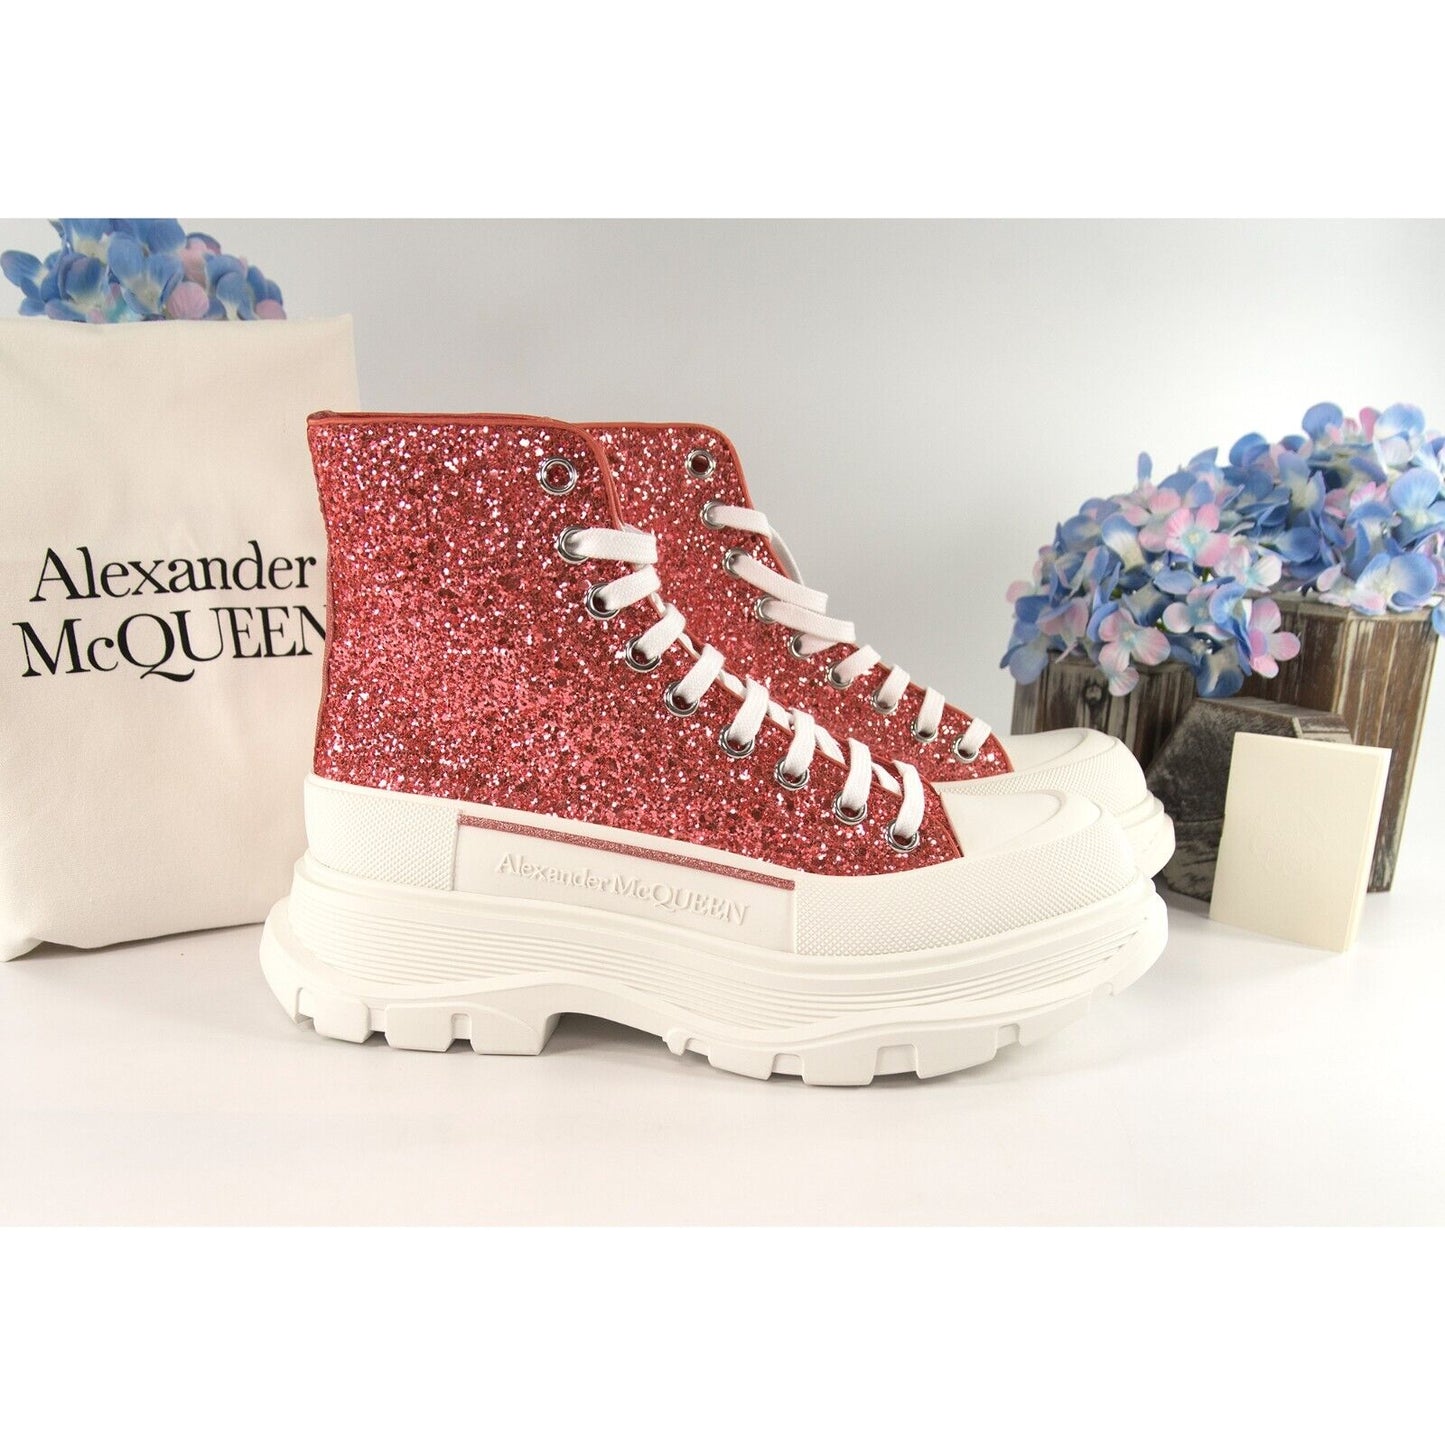 Alexander McQueen Deck Tread Slick Rose Gold Glitter High Top Sneakers 39 NIB